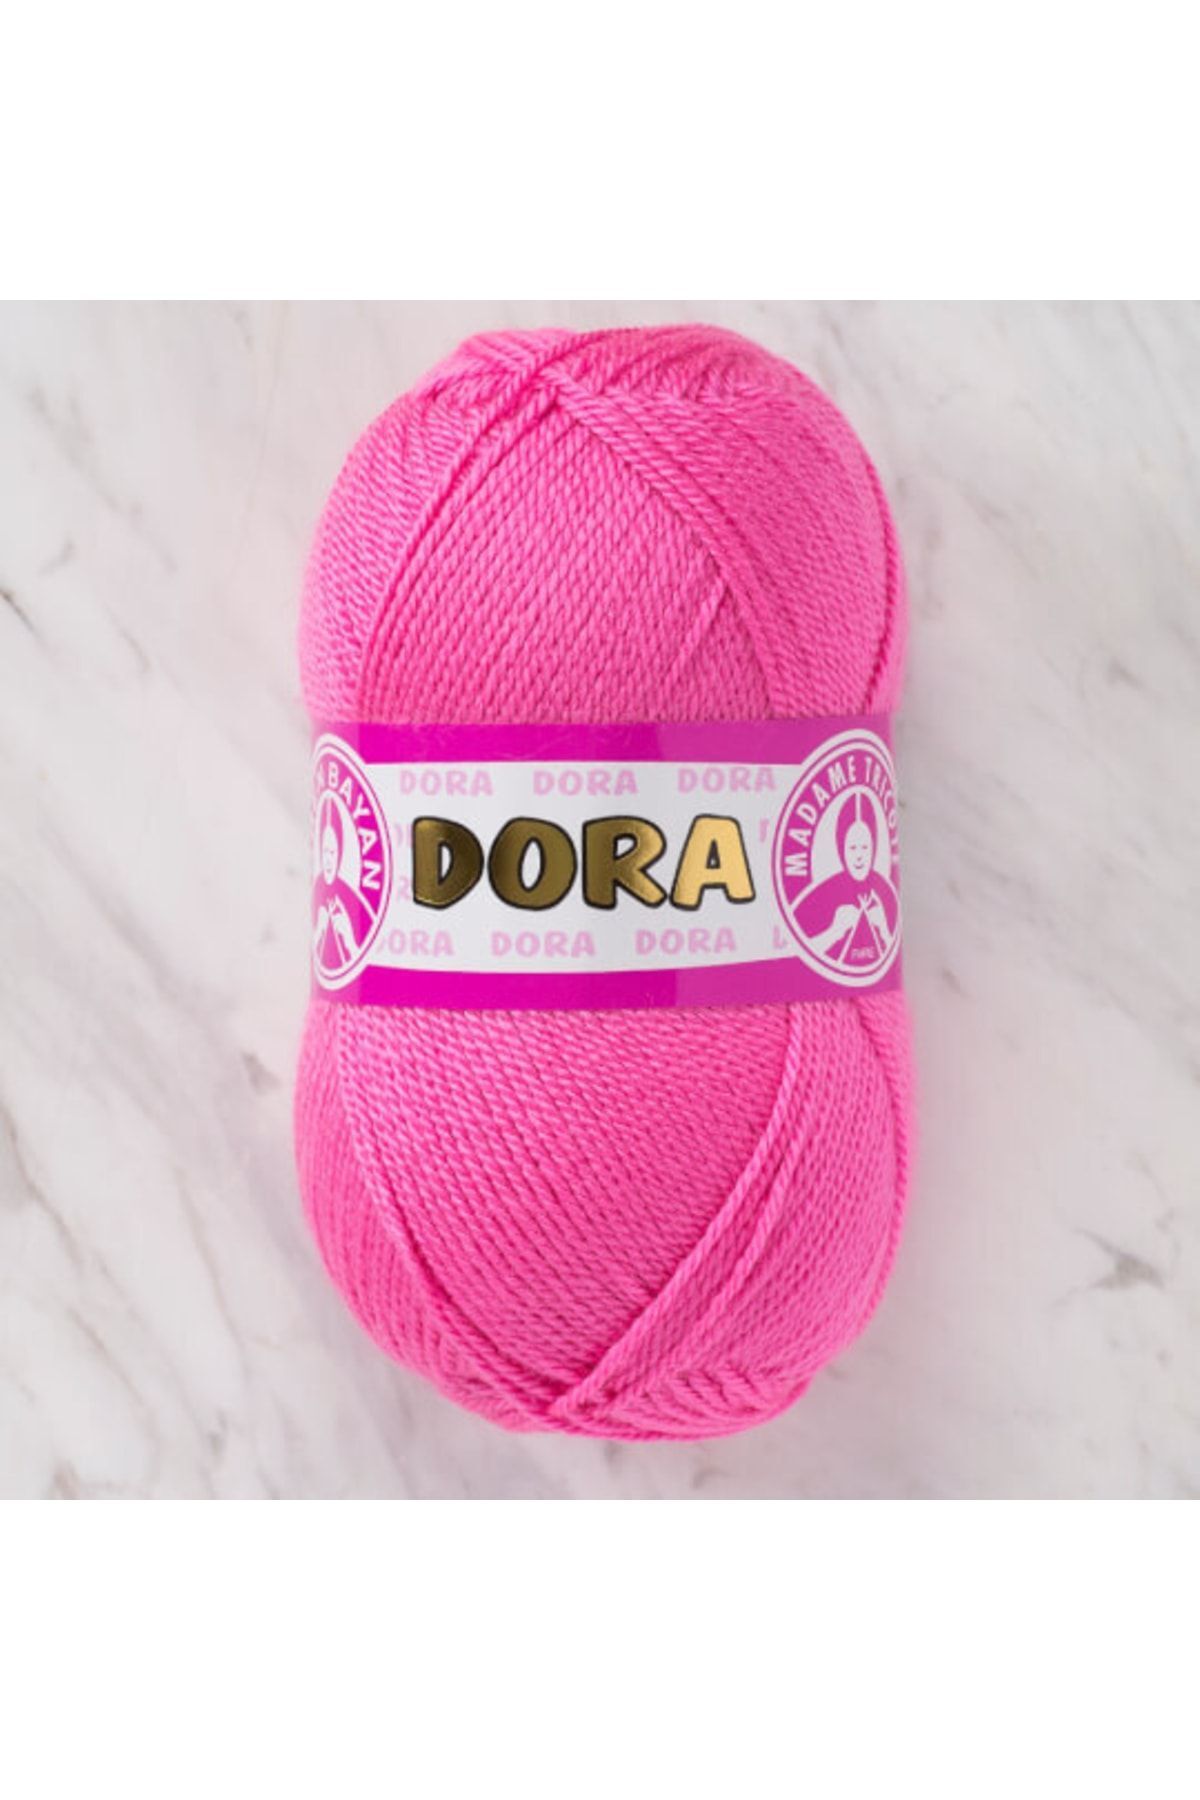 Ören Bayan Dora Patiklik Çoraplık El Örgü Ipi 5 Adet 042 Ahududu